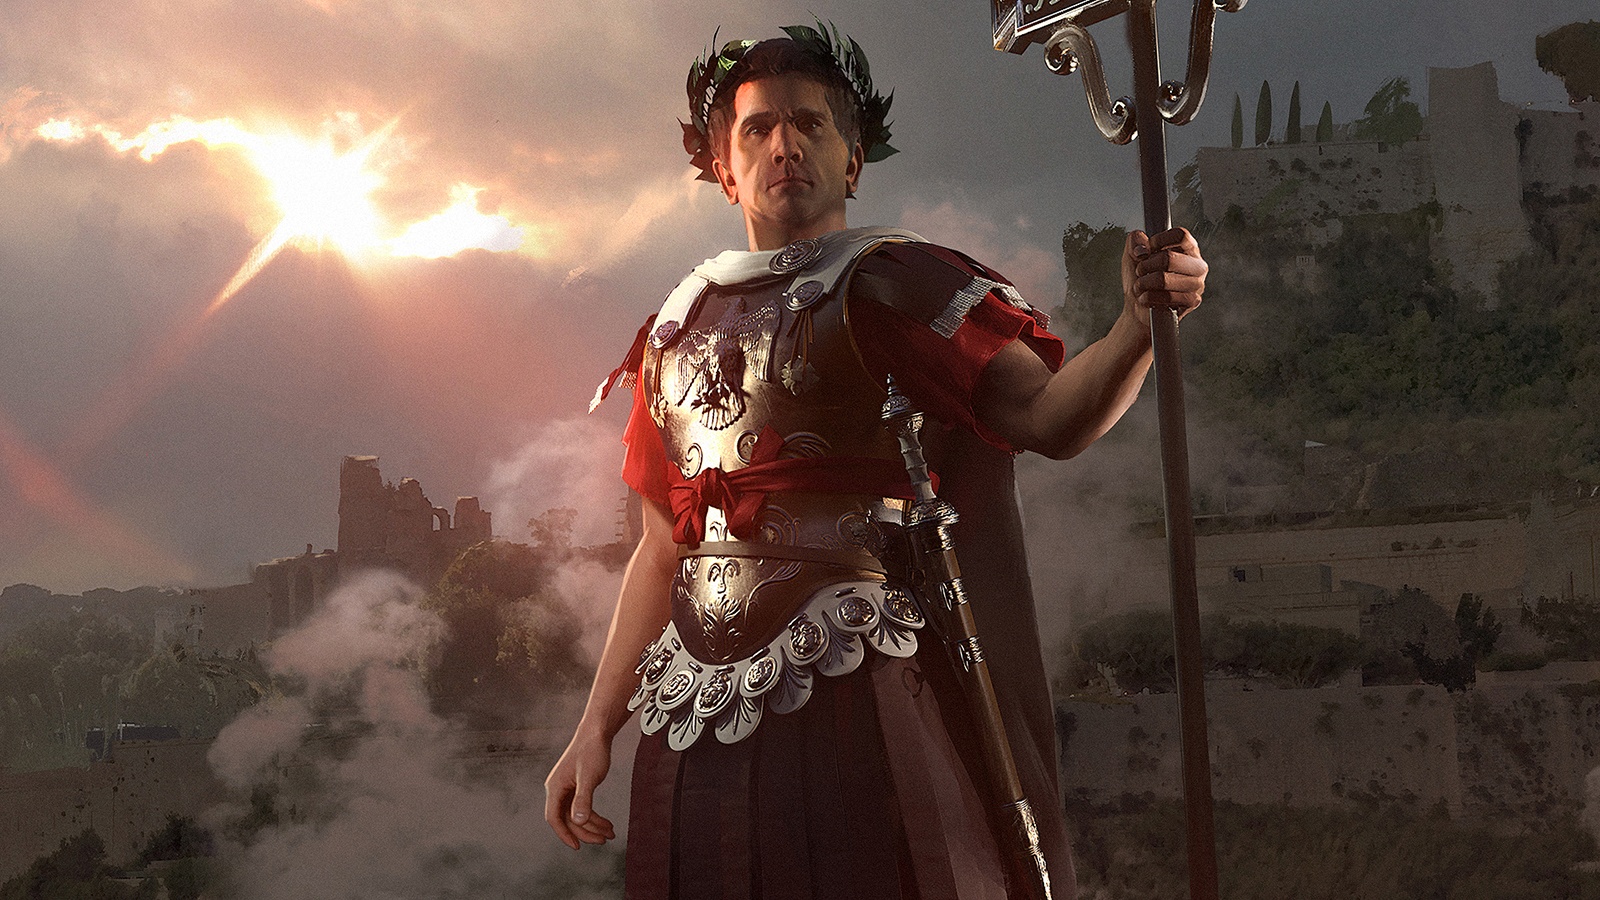 Total War: Arena — гайд по фракции «Рим»